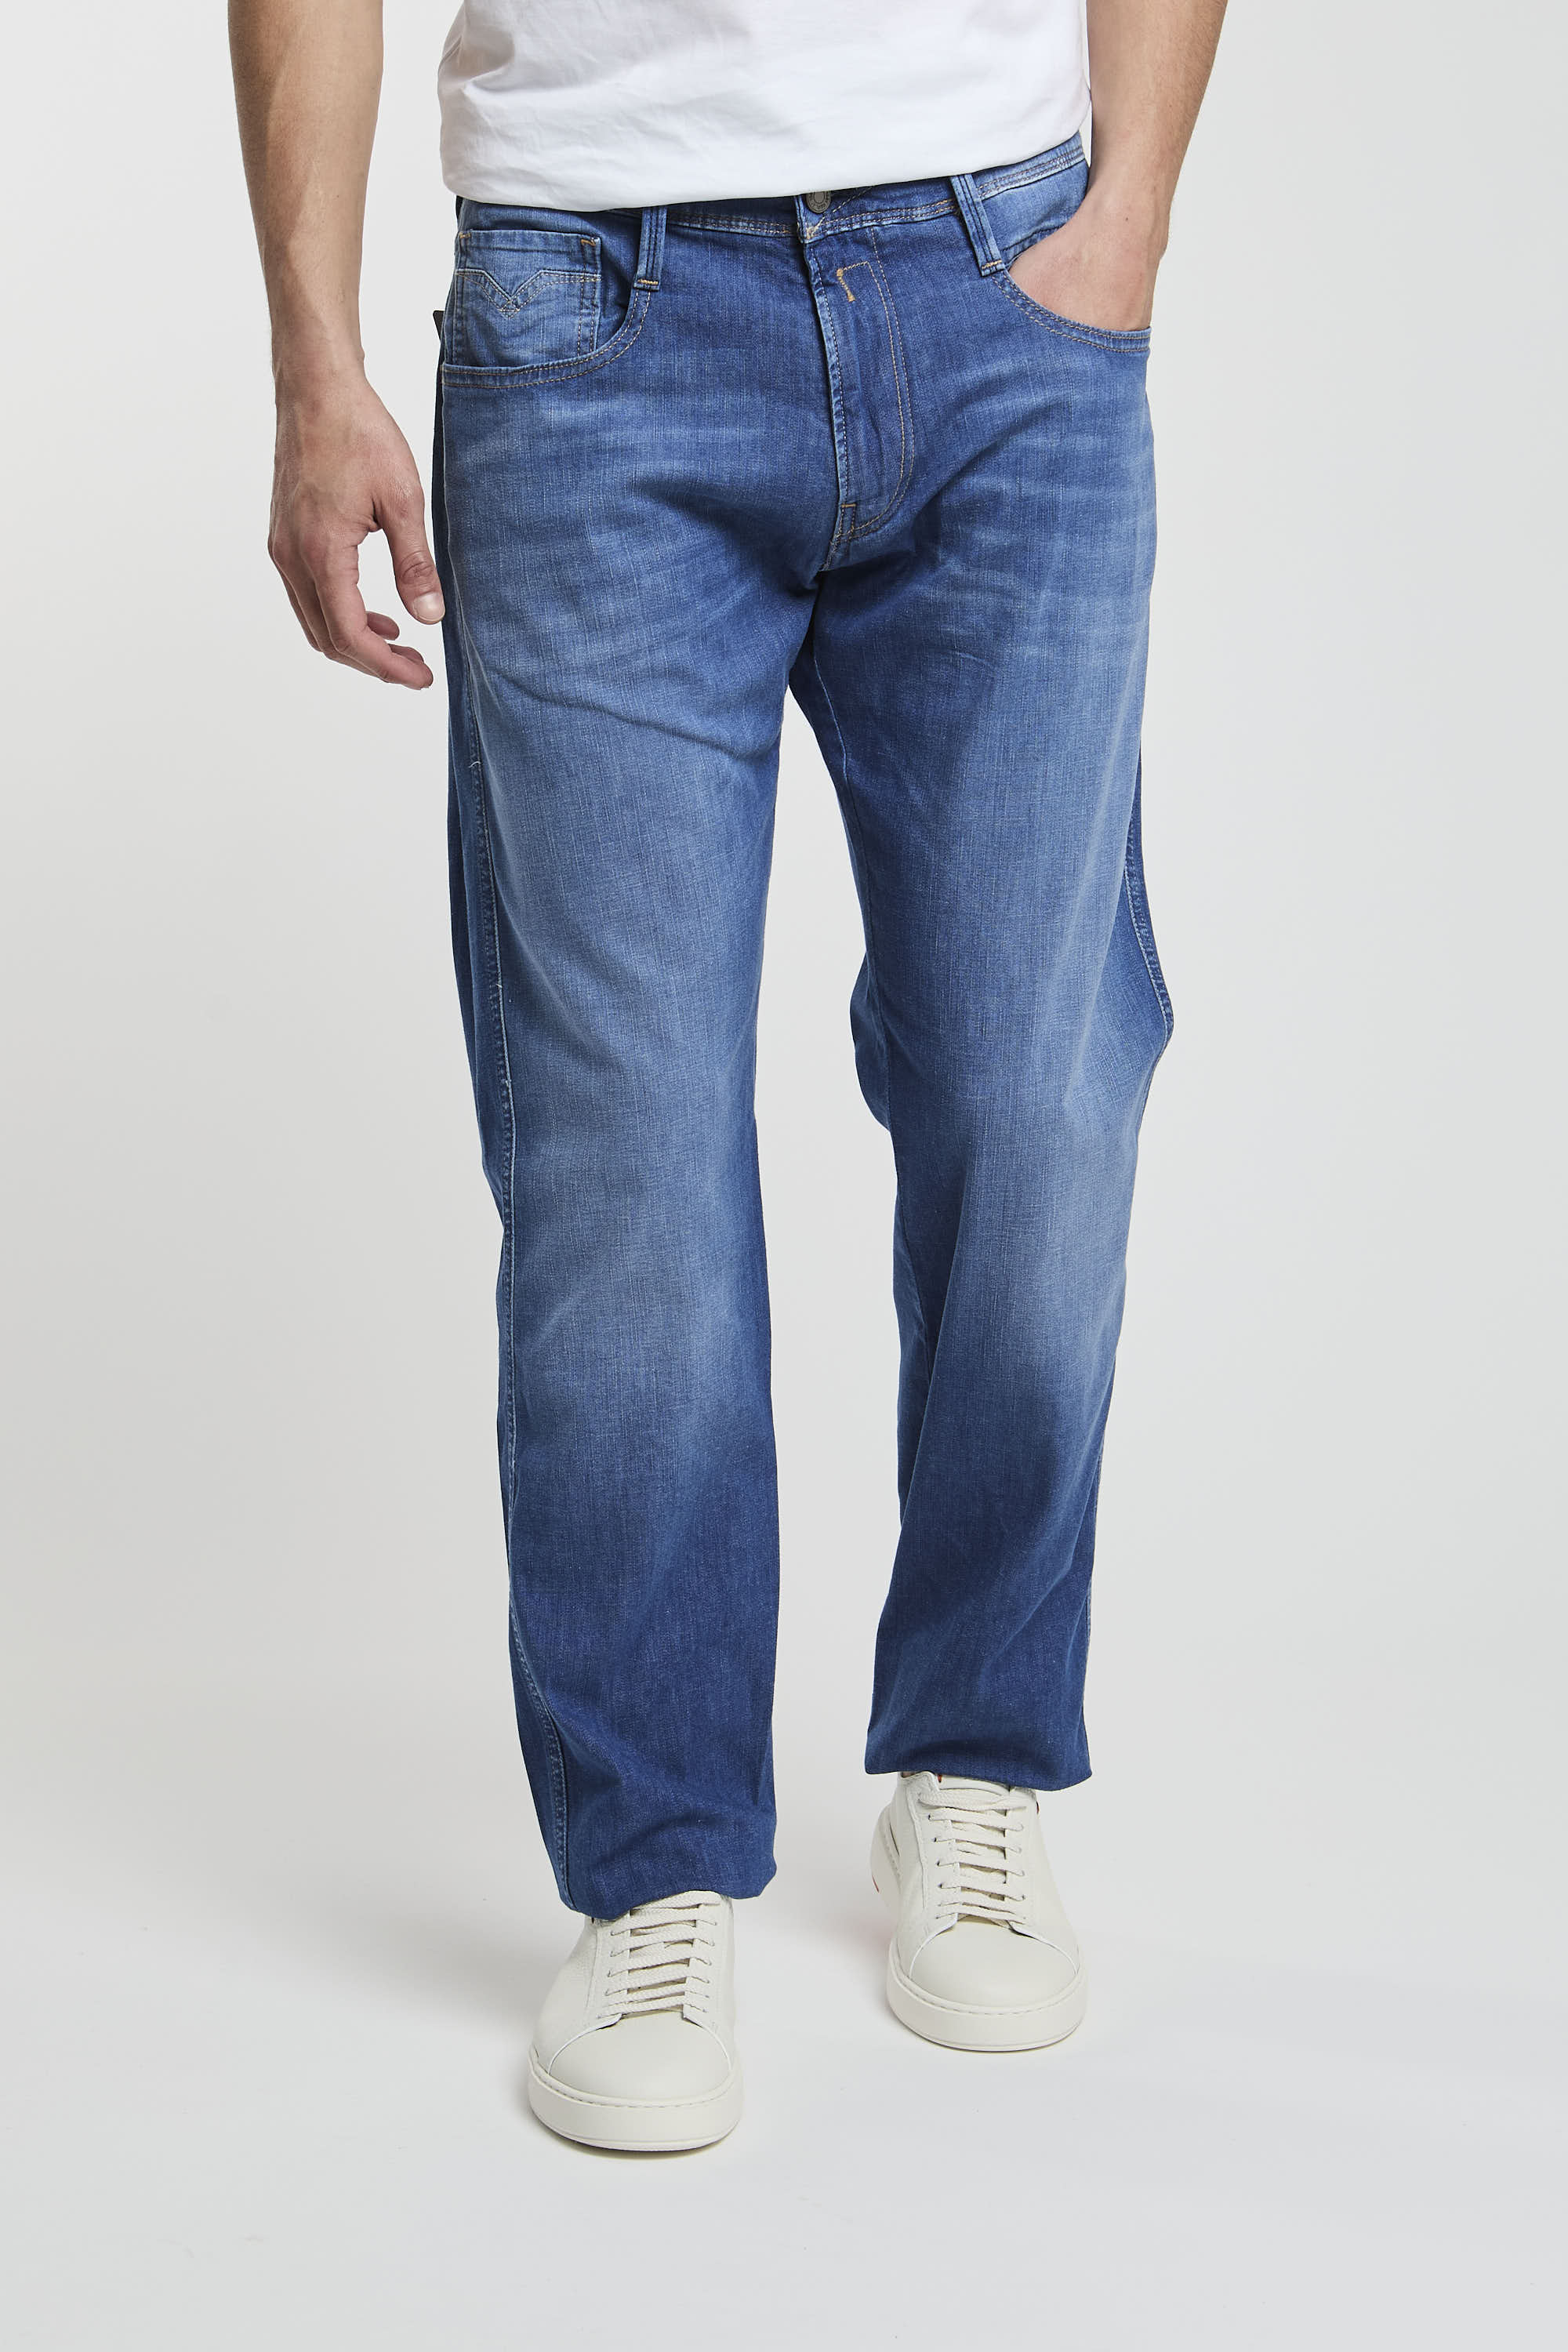 Replay Slim Fit Jeans Denim Made of Cotton/Lyocell/Elastomultiester/Elastane-1